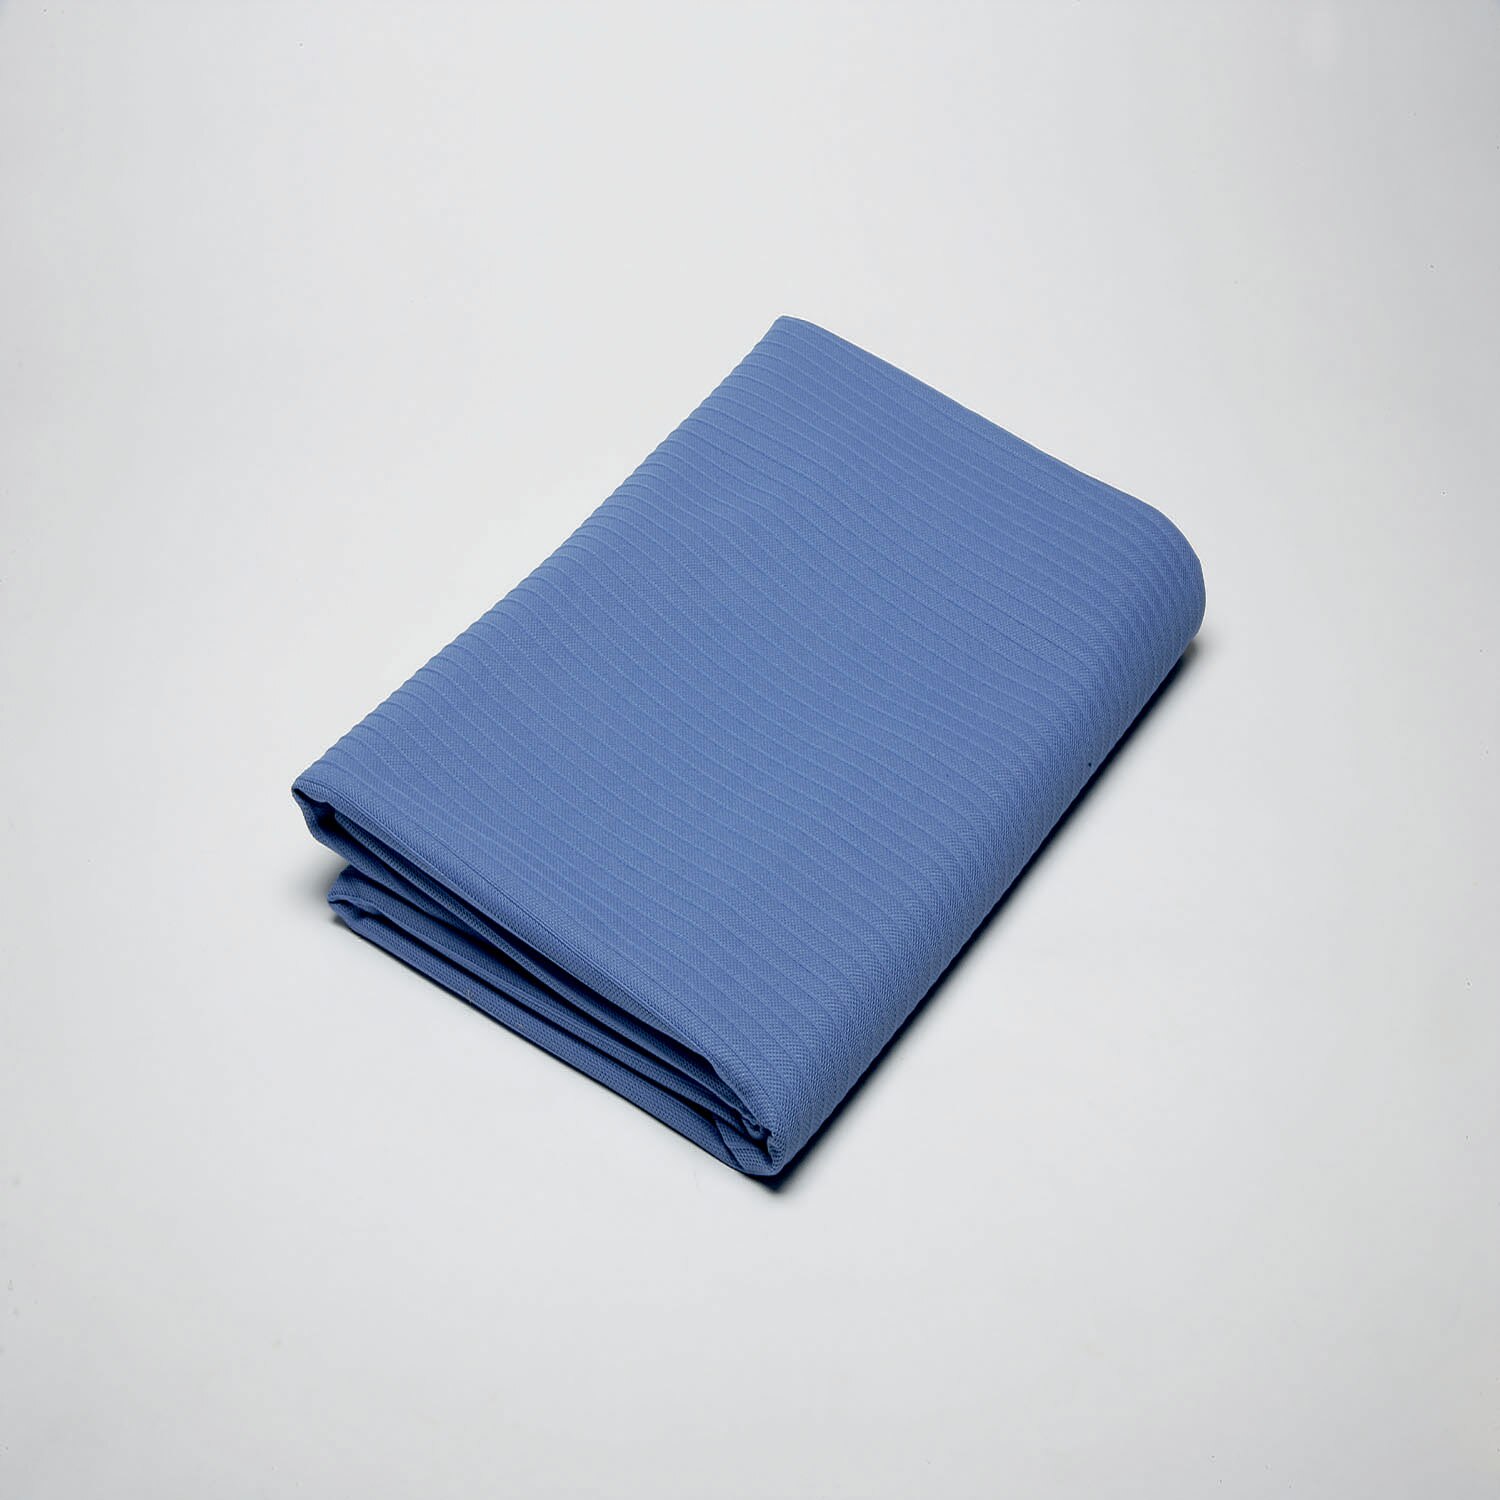 Bedspread, Blue, 76" x 103"